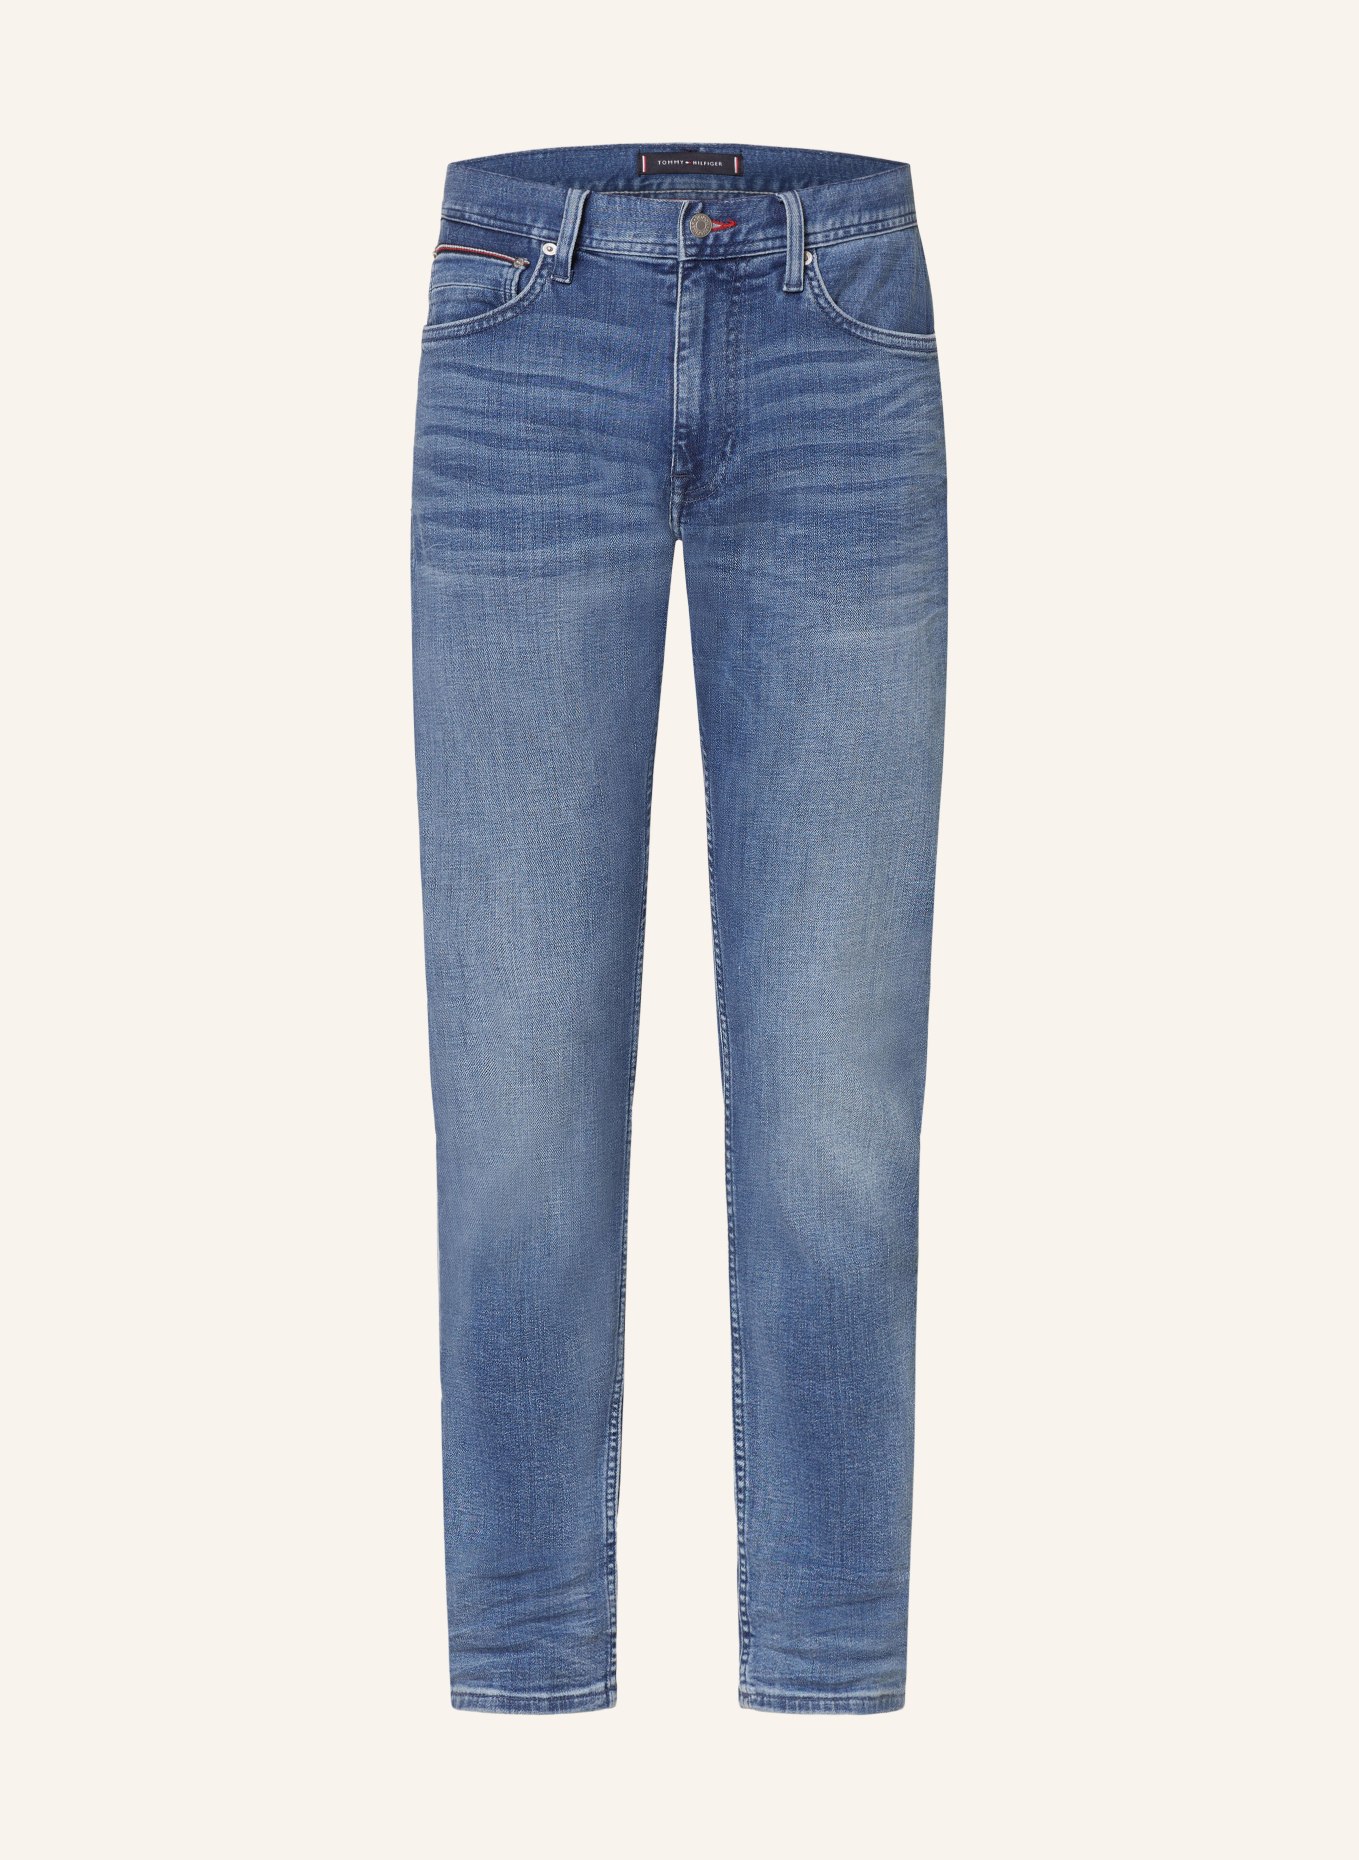 TOMMY HILFIGER Jeans HOUSTON Slim Taper Fit, Farbe: 1BD Whale Indigo (Bild 1)